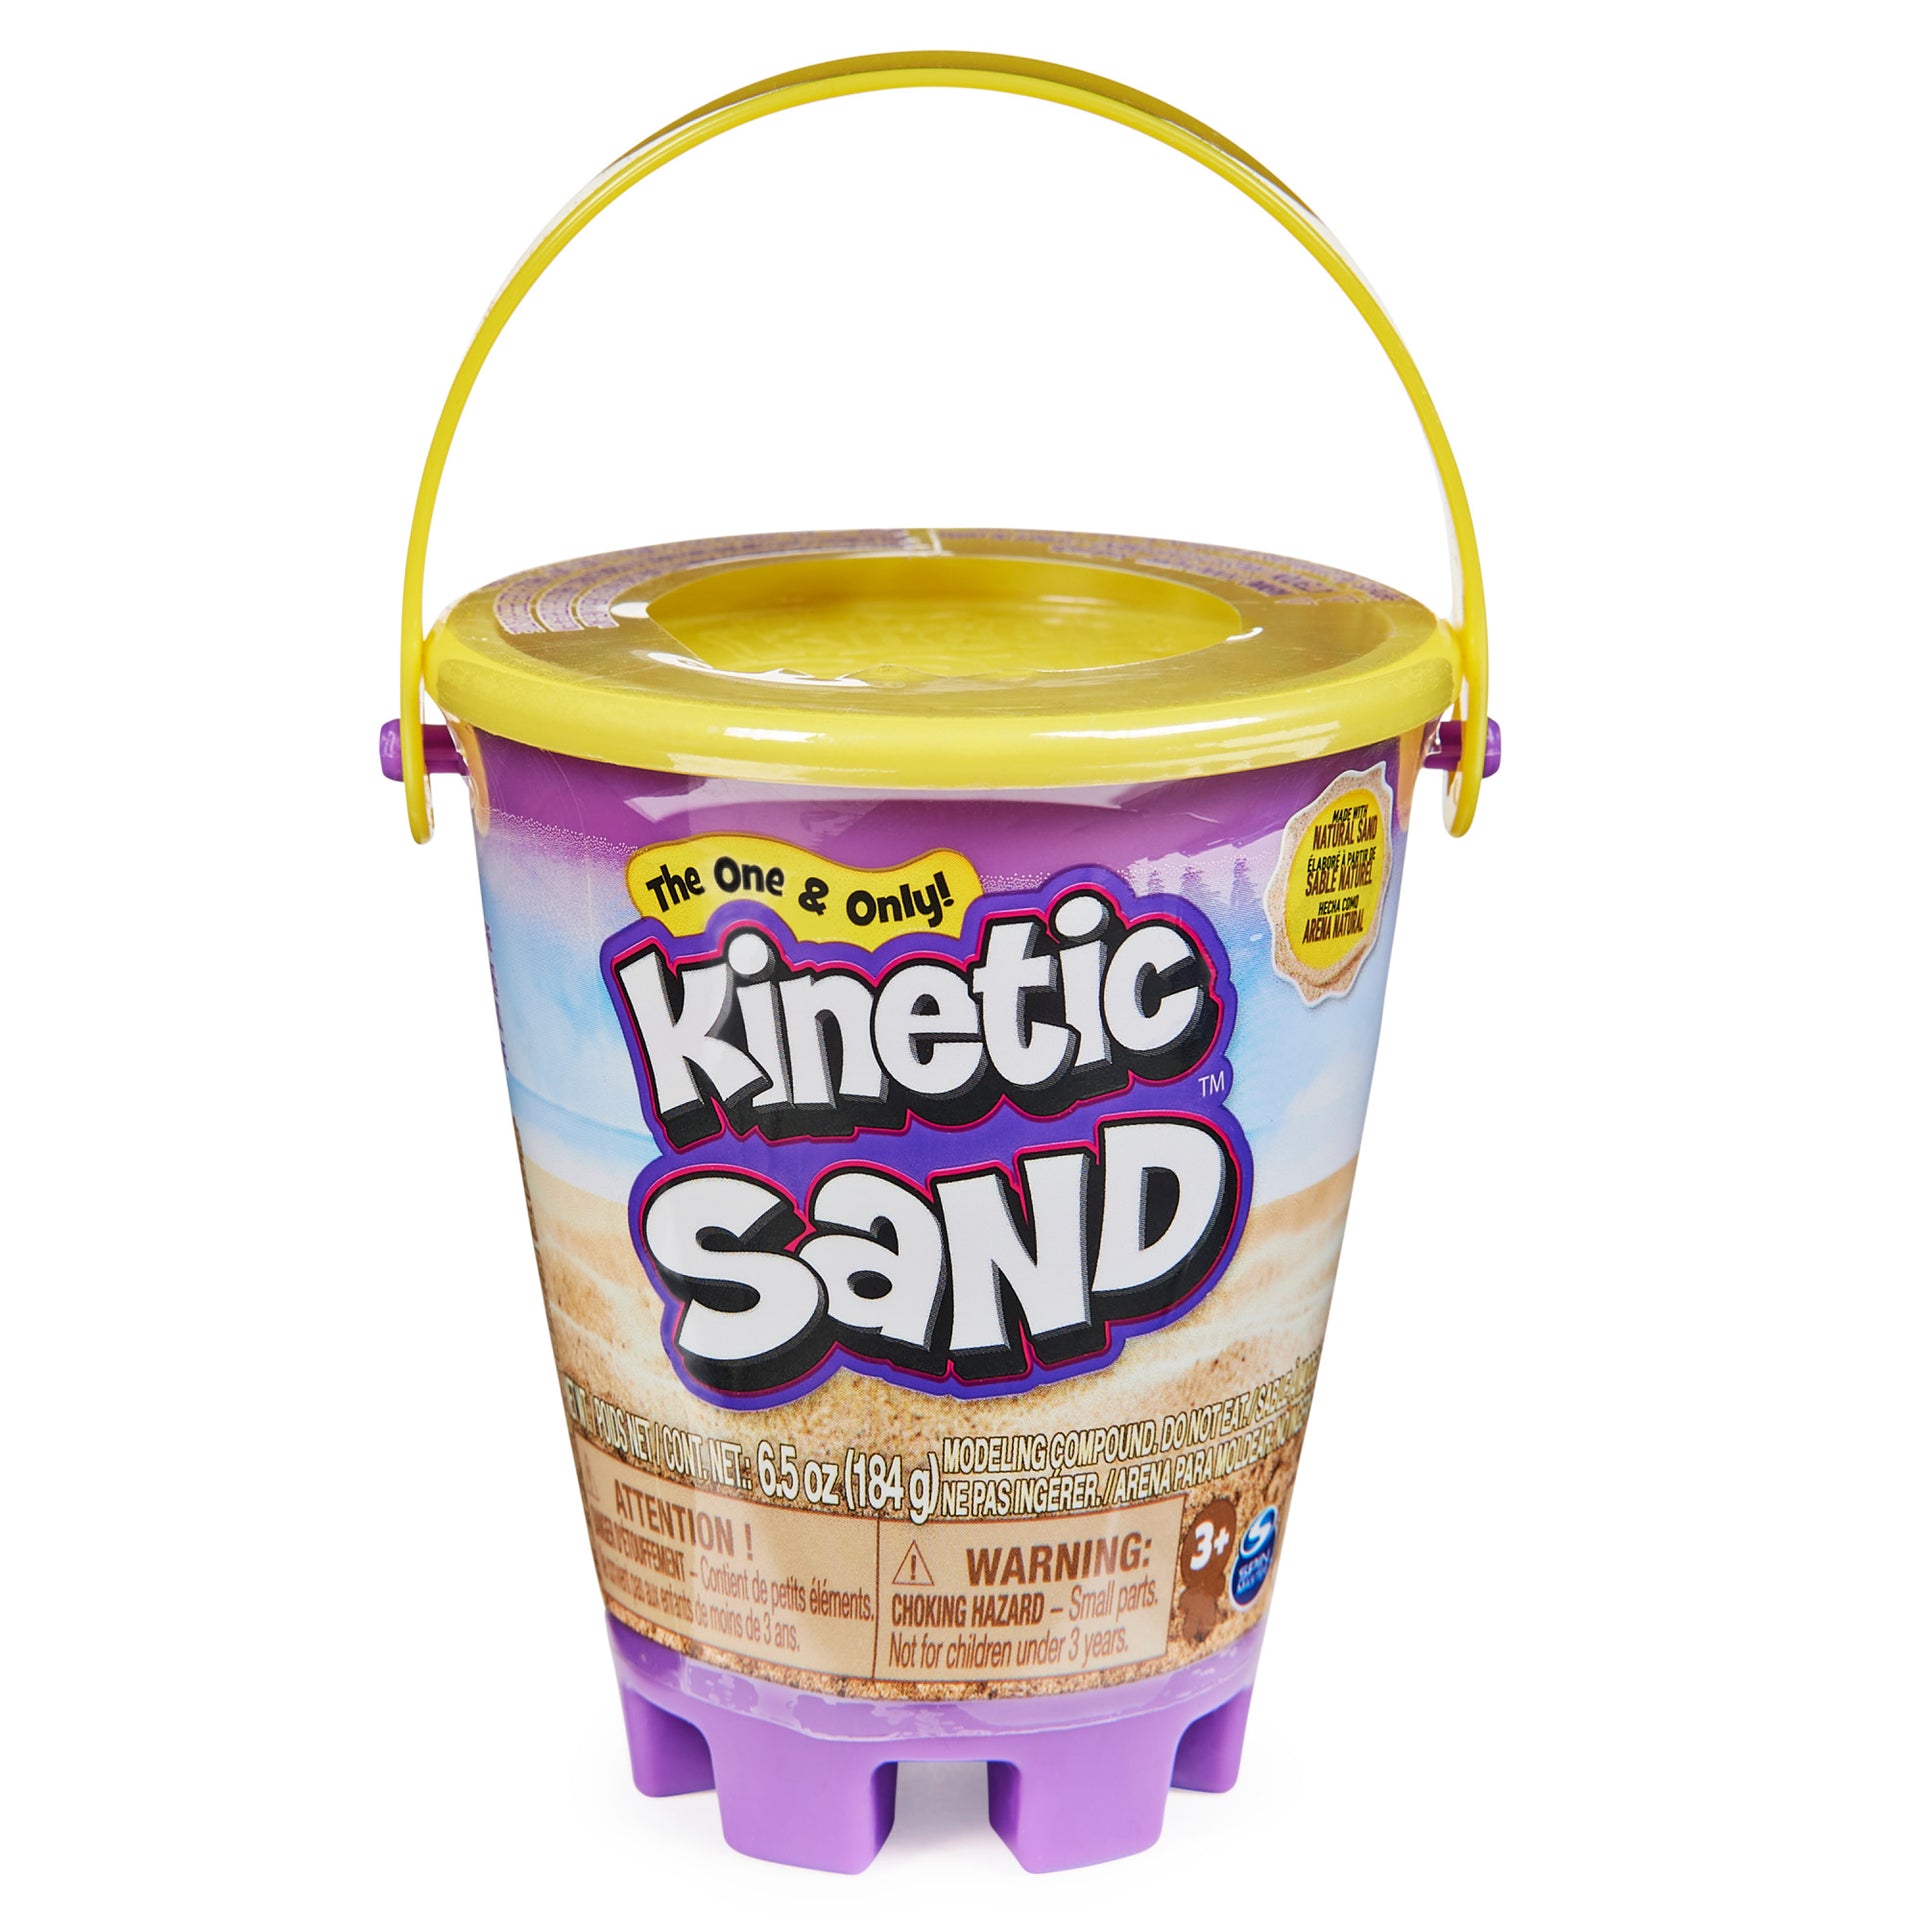  Kinetic Sand, Slice N' Surprise Set with 13.5oz of